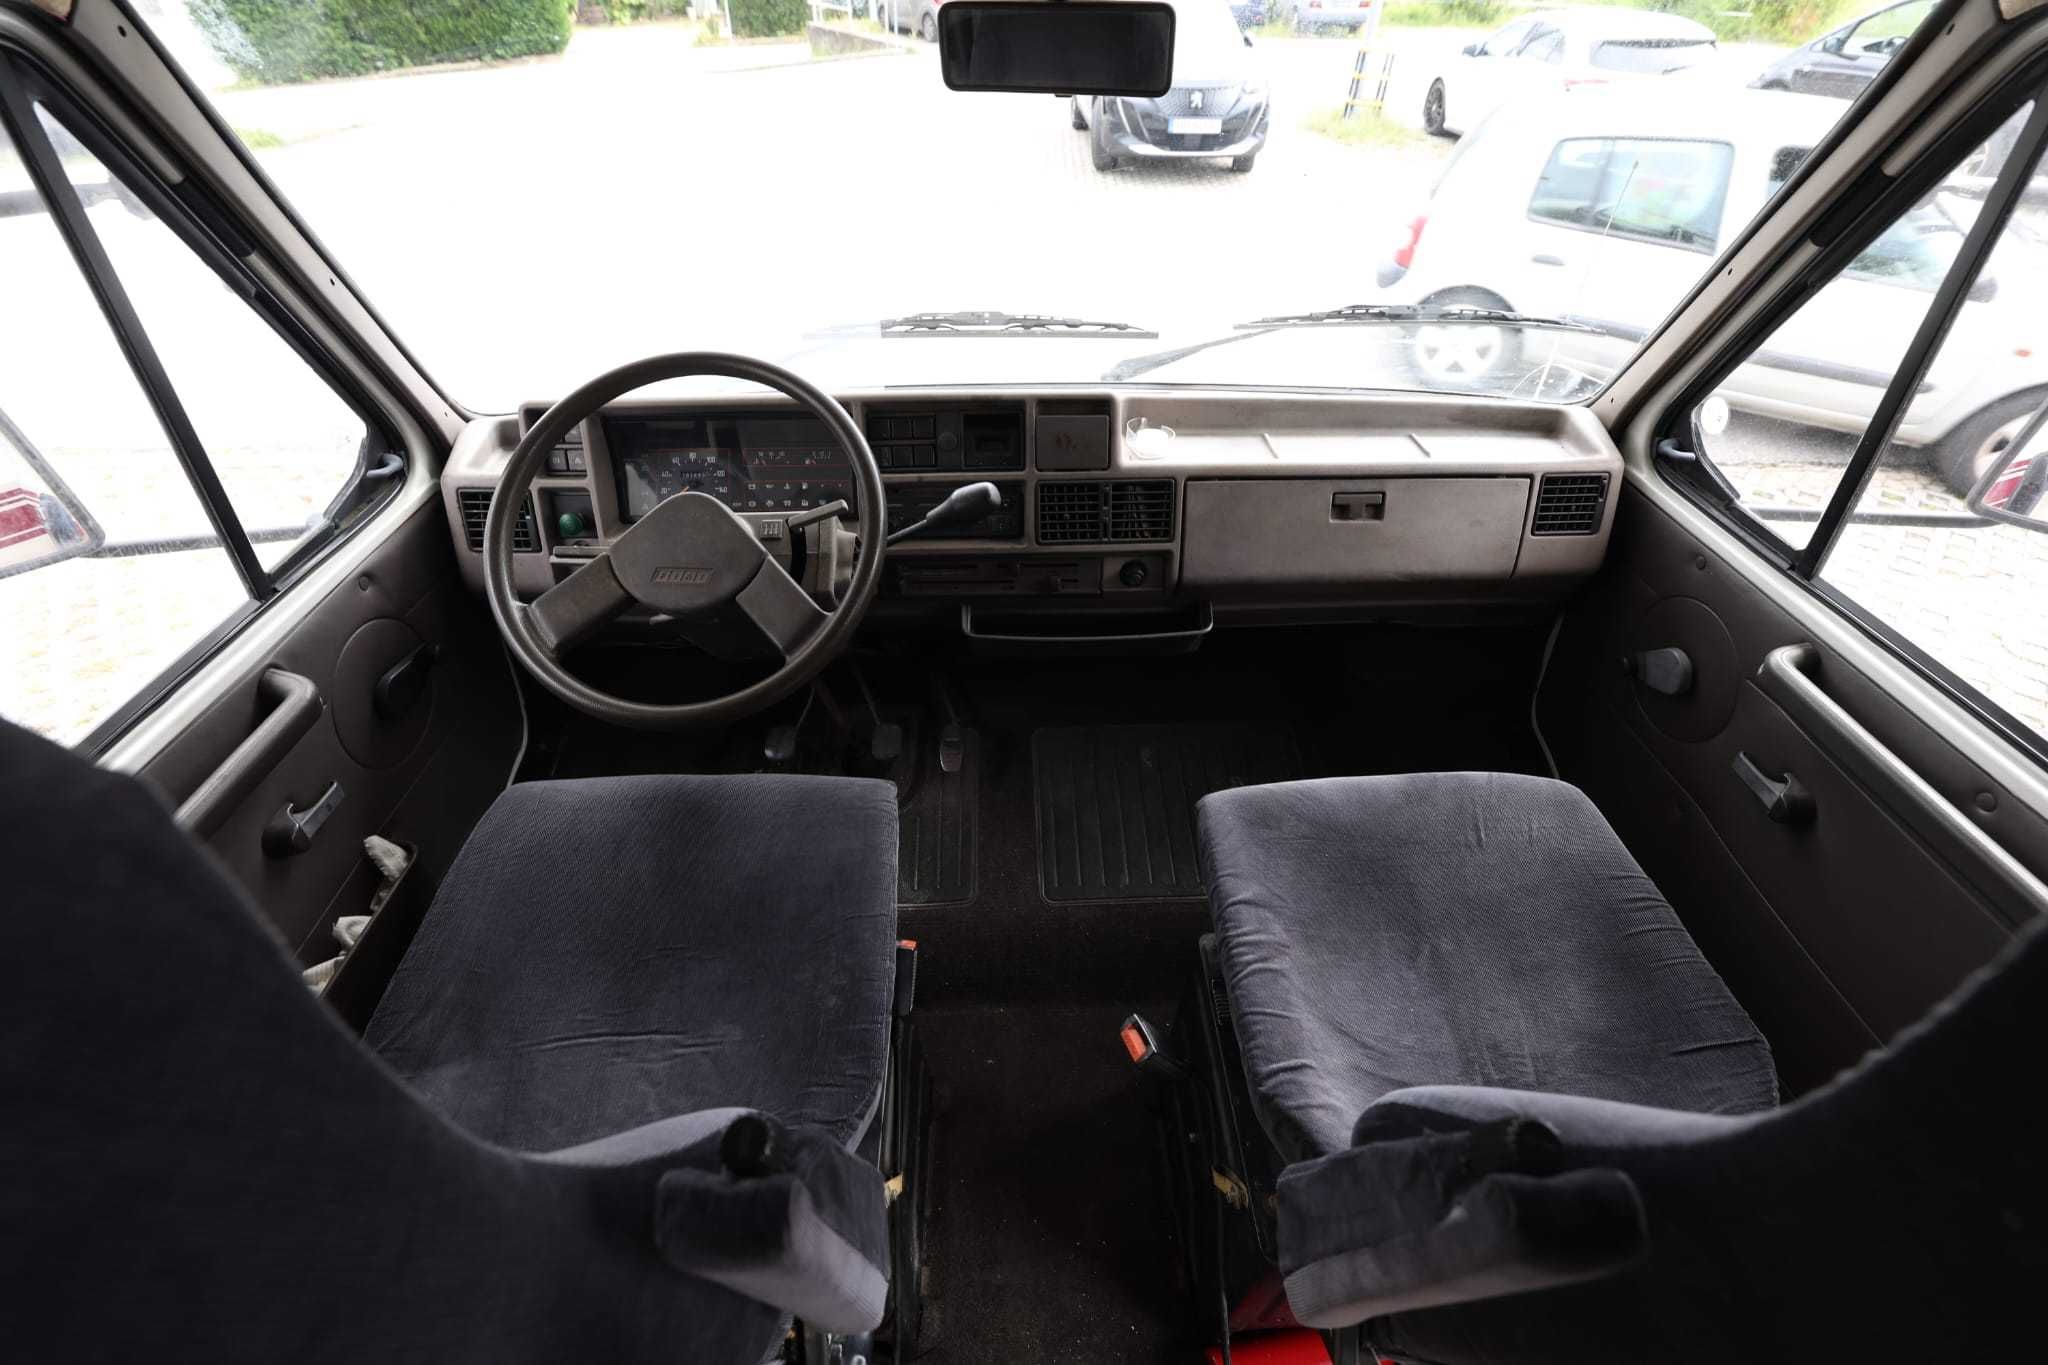 Autocaravana 2.5TD ano 1990